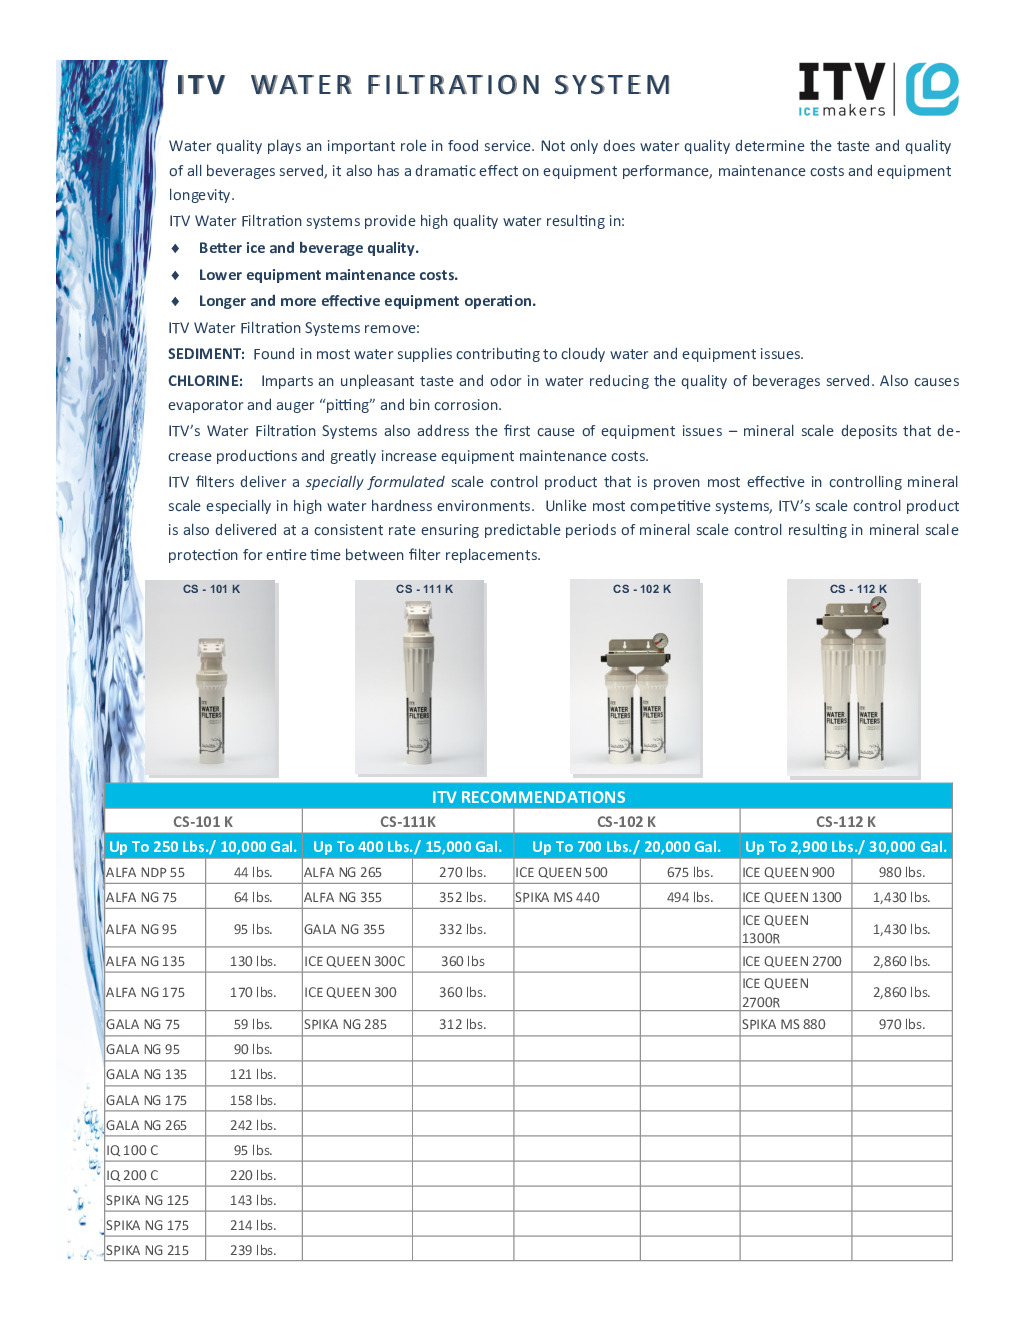 ITV CS-11 Water filtration system, 16